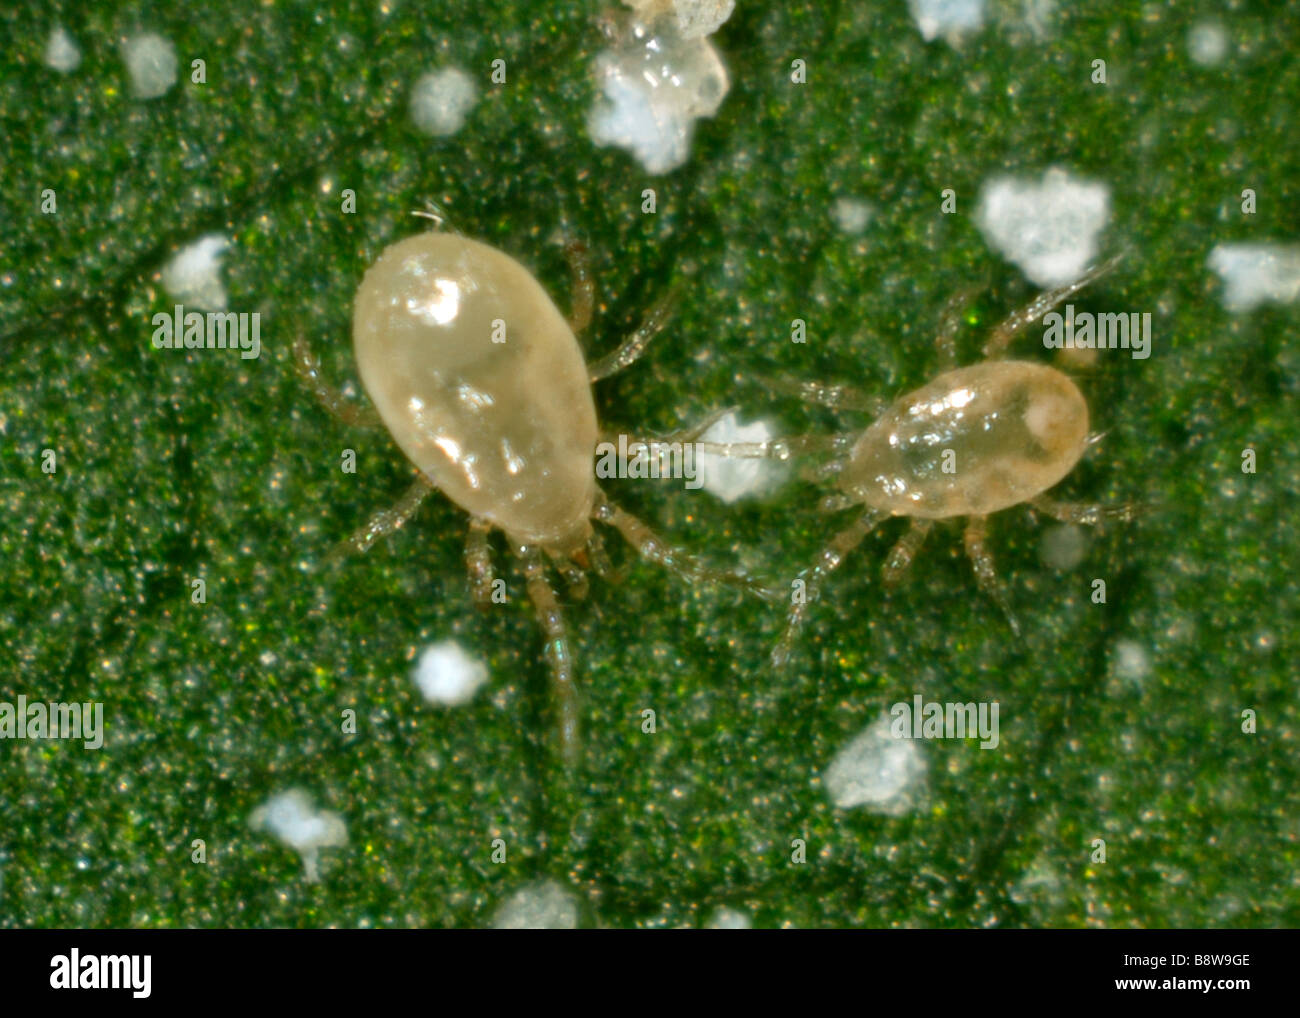 A predatory mite Amblyseius swirskii adult and nymph on a leaf Stock Photo